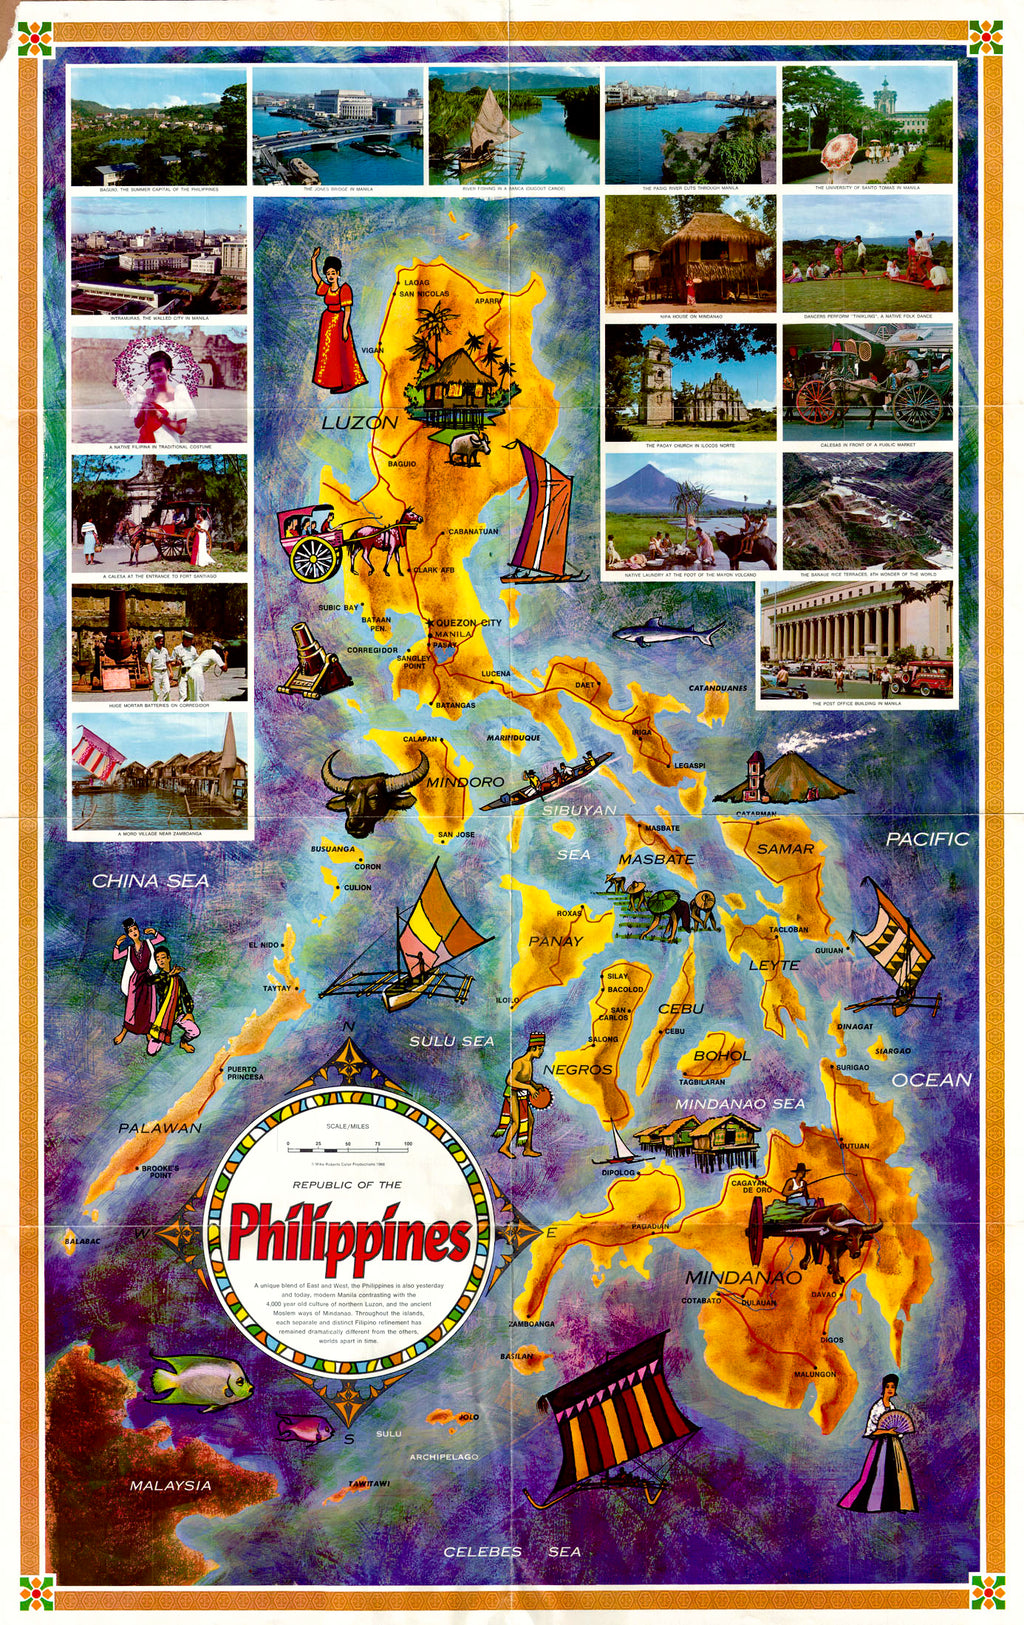 Republic of the Philippines, Filipino, Philippine islands, Luzon